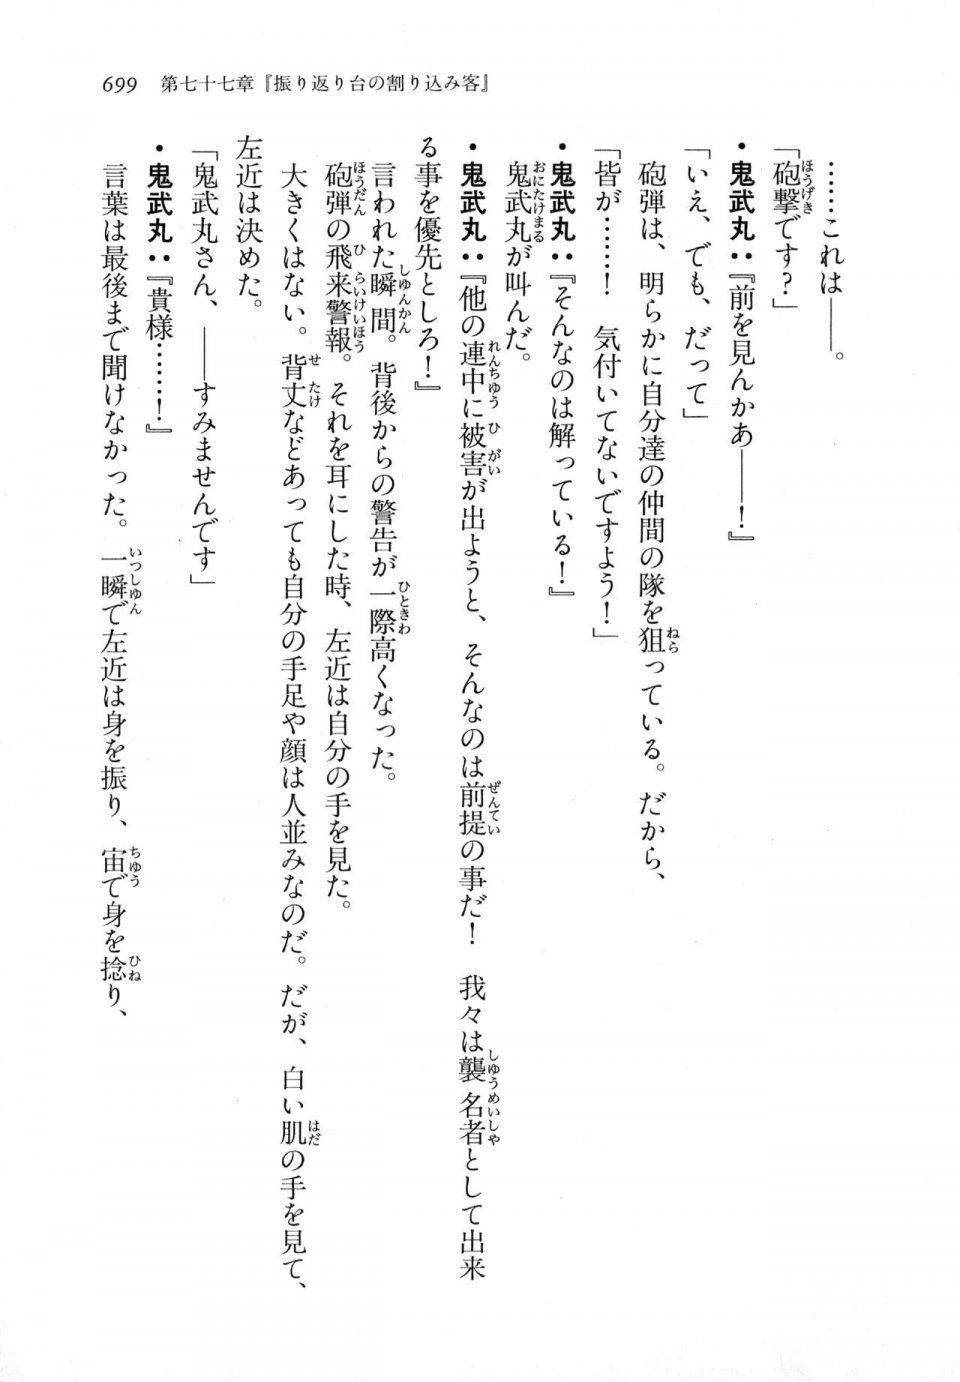 Kyoukai Senjou no Horizon LN Vol 18(7C) Part 2 - Photo #139